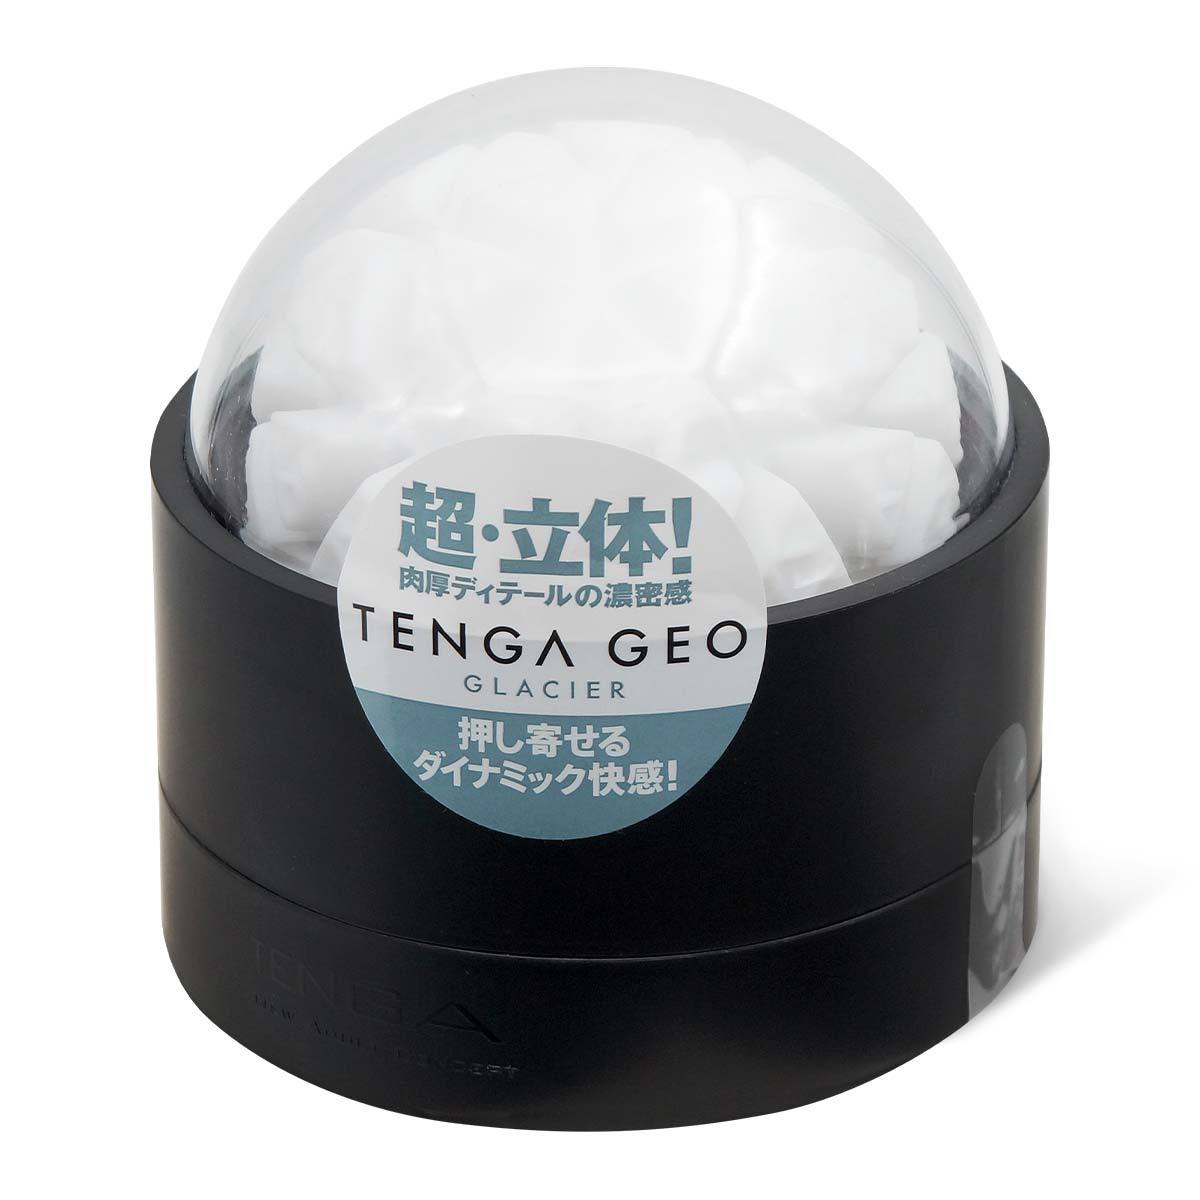 TENGA GEO GLACIER 冰河球-TENGA-TENGA 香港網上專門店 - 專營 TENGA 飛機杯及潤滑劑